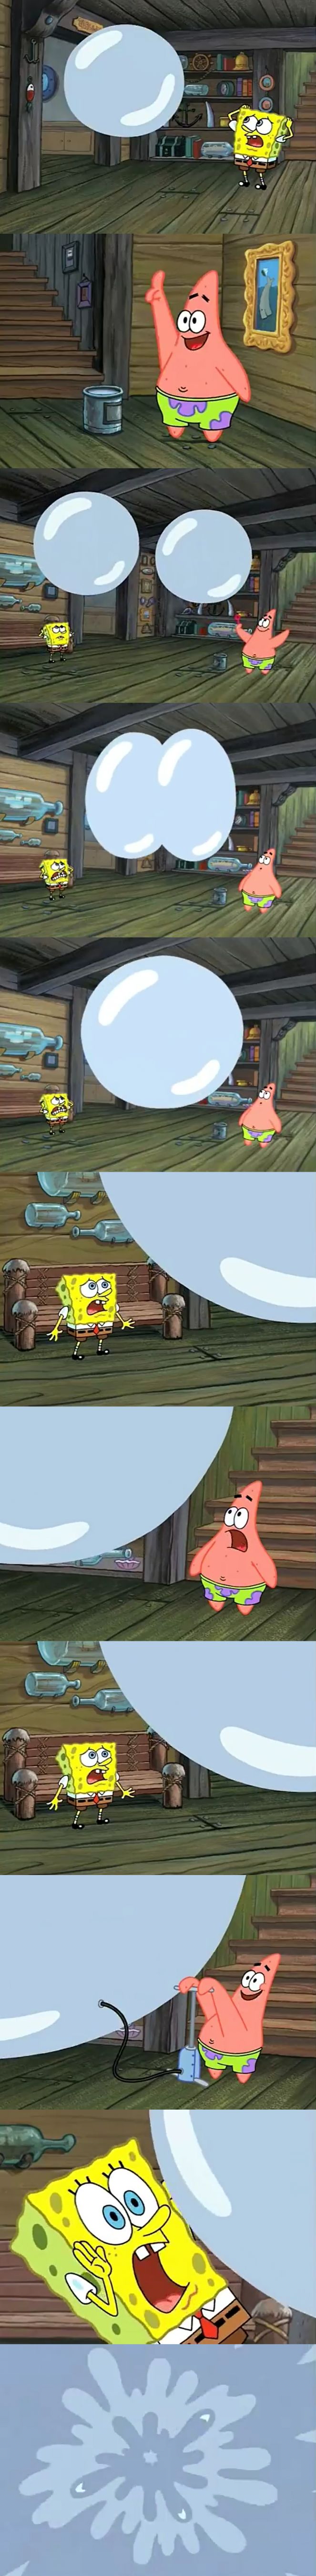 Spongebob Two Giant Paint Bubbles Meme Generator Imgflip